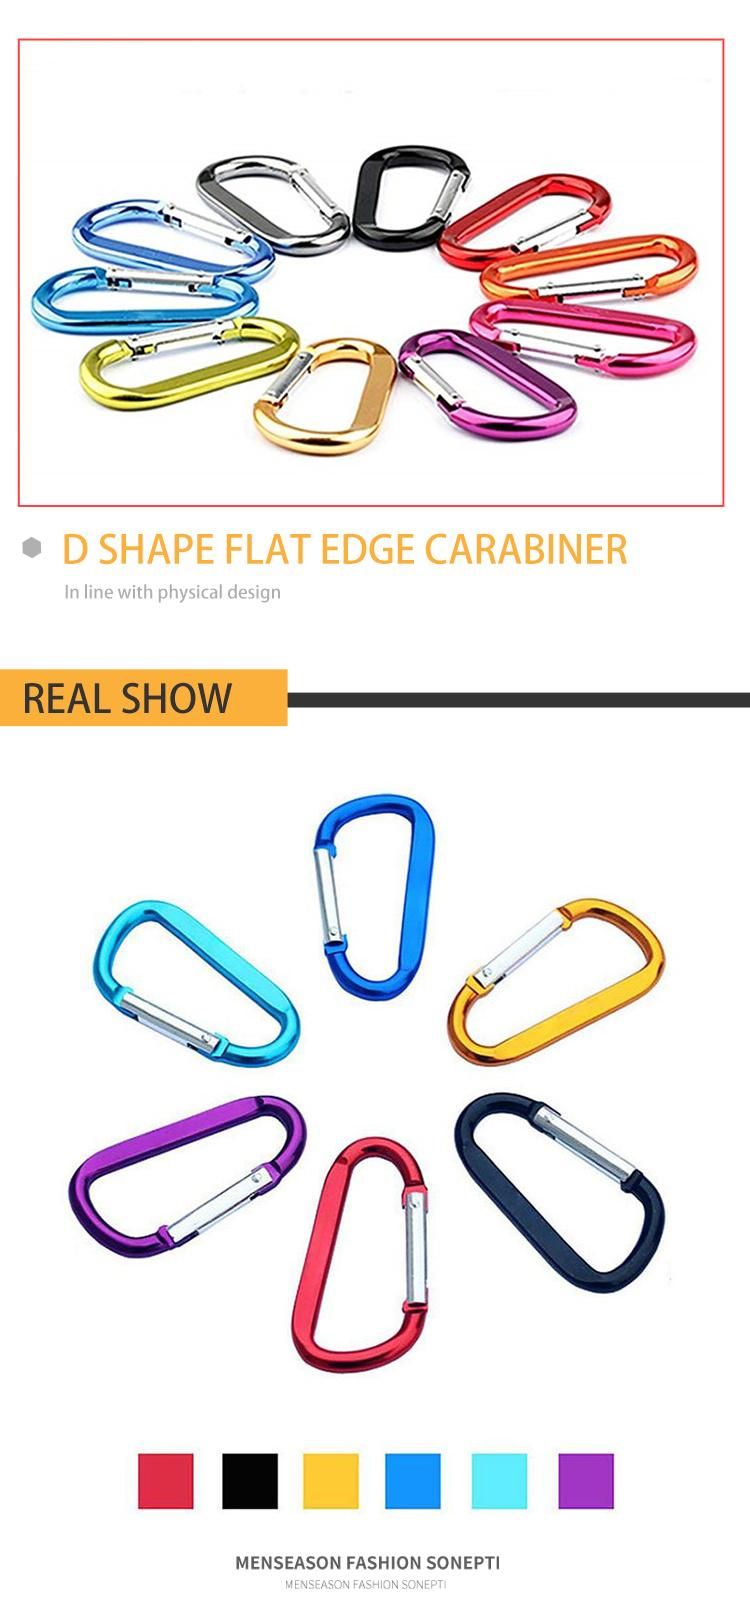 Strong 5cm Length Swivel Carabiner Climbing O Ring Aluminum Carabiner Hooks as a Gift